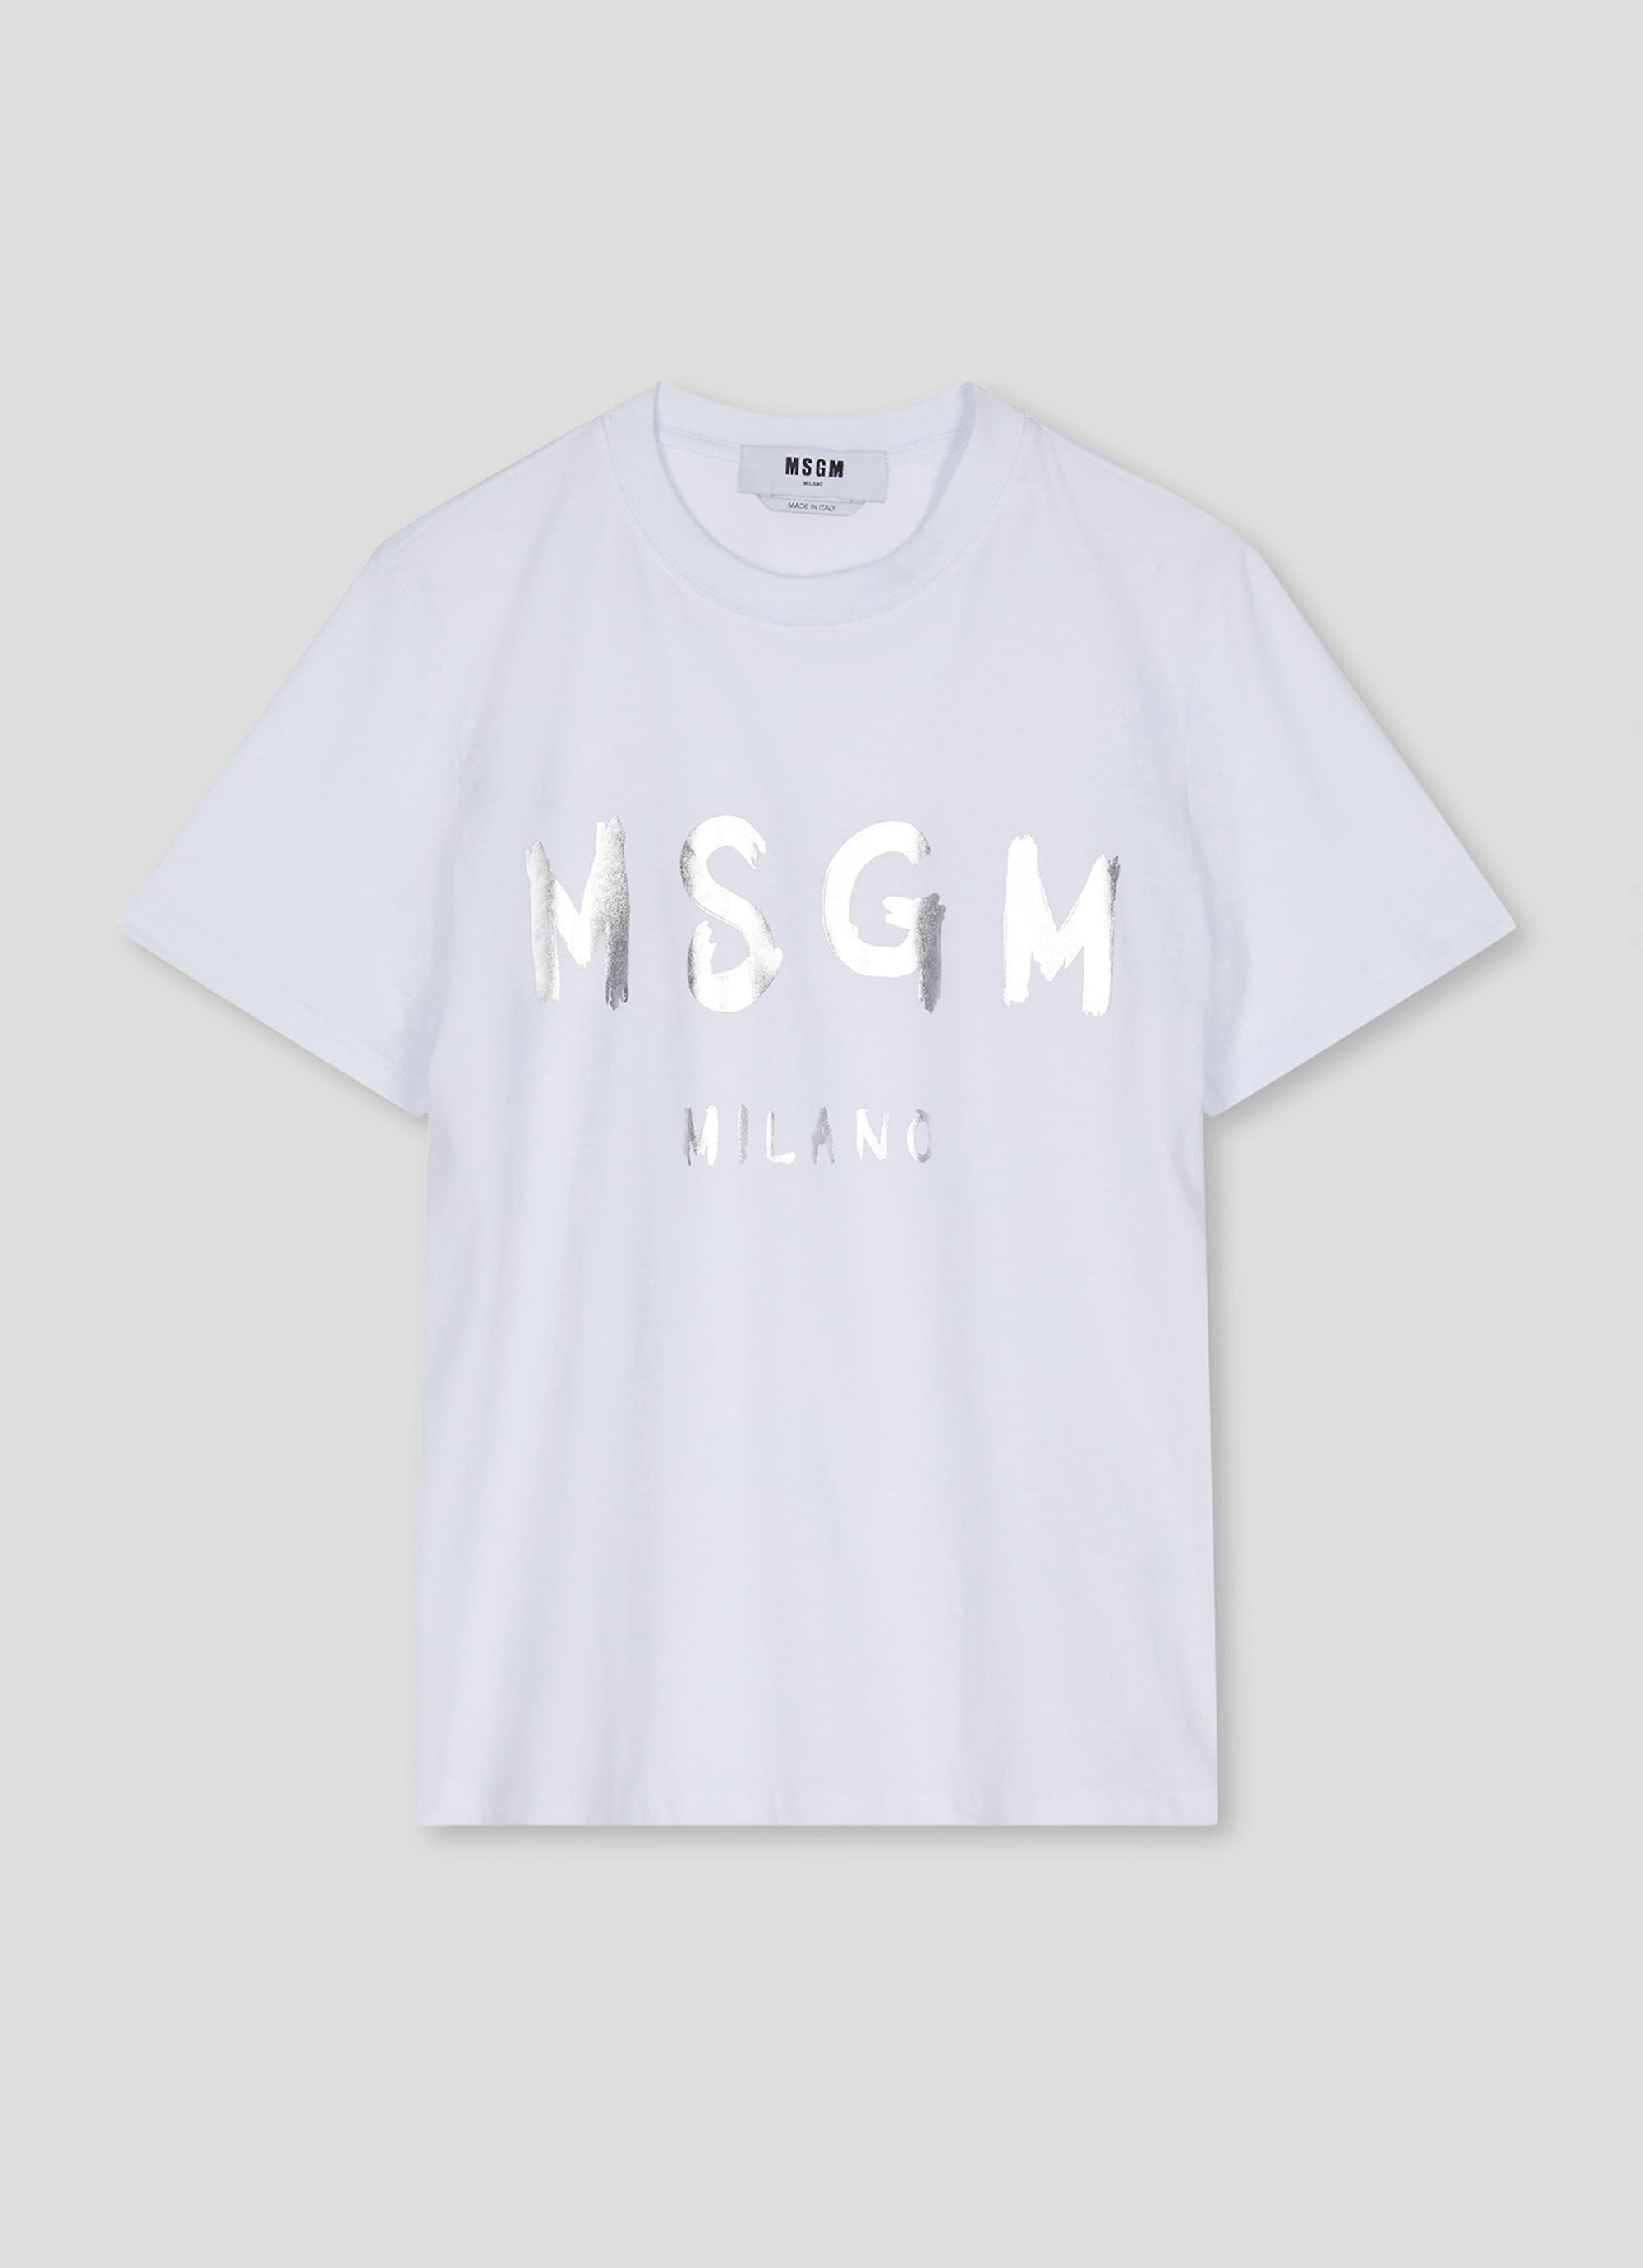 MSGM ブラッシュロゴTシャツ【FOIL PRINT】 詳細画像 ホワイト×シルバー 1